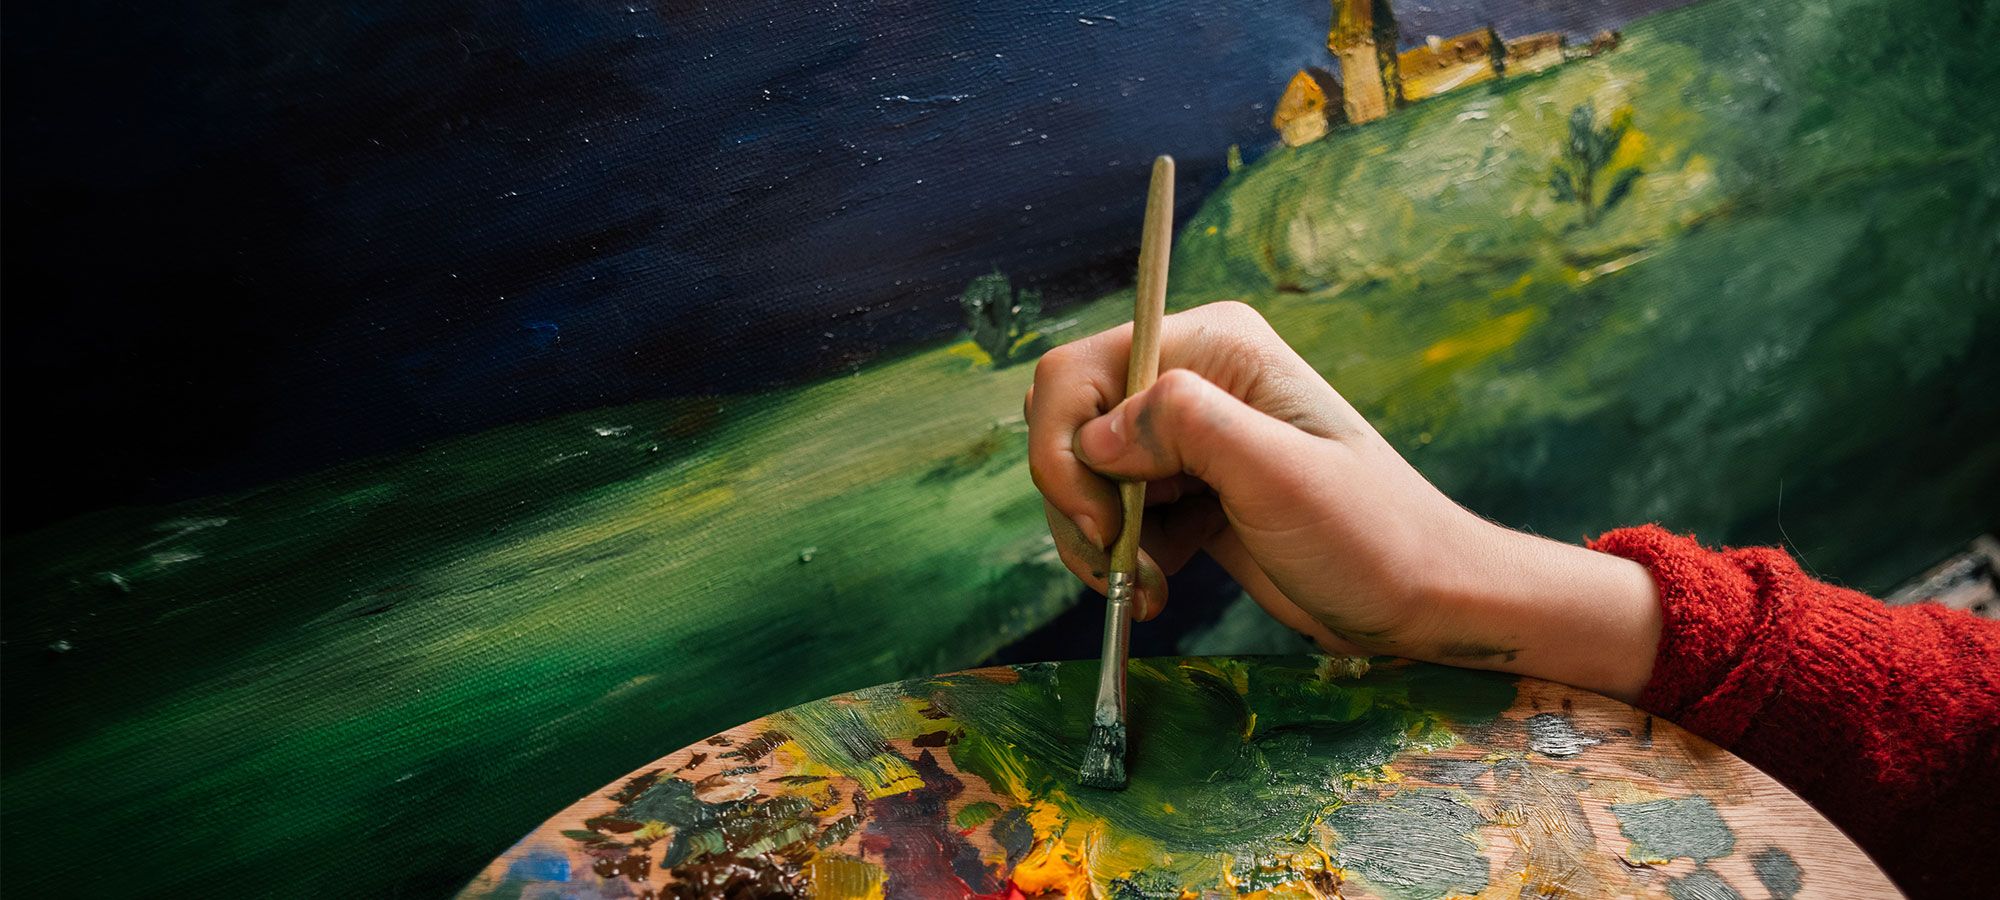 Del navegar pittoresco: workshop per adulti di pittura a olio